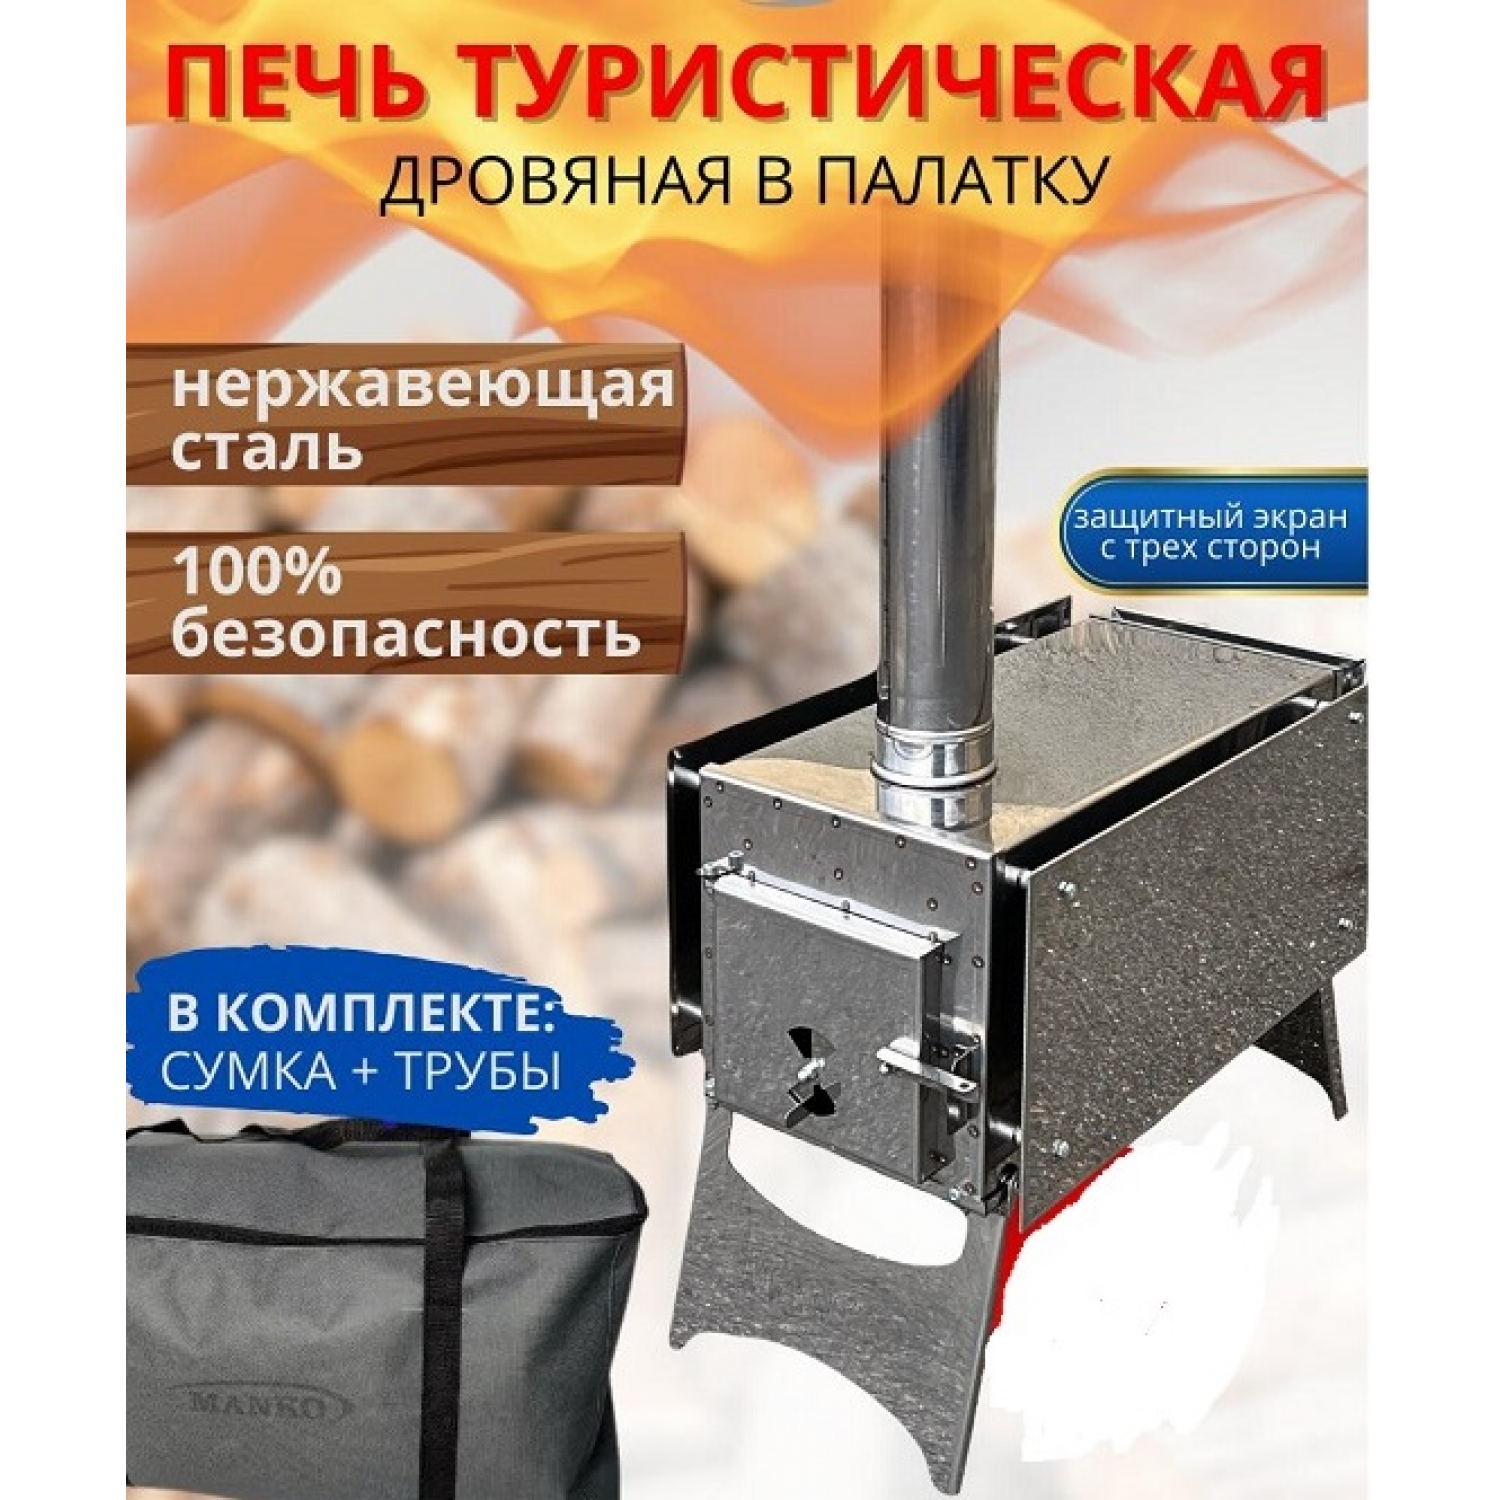 Покупка Печь на дровах MANKO с трубами M в Минске Беларуси